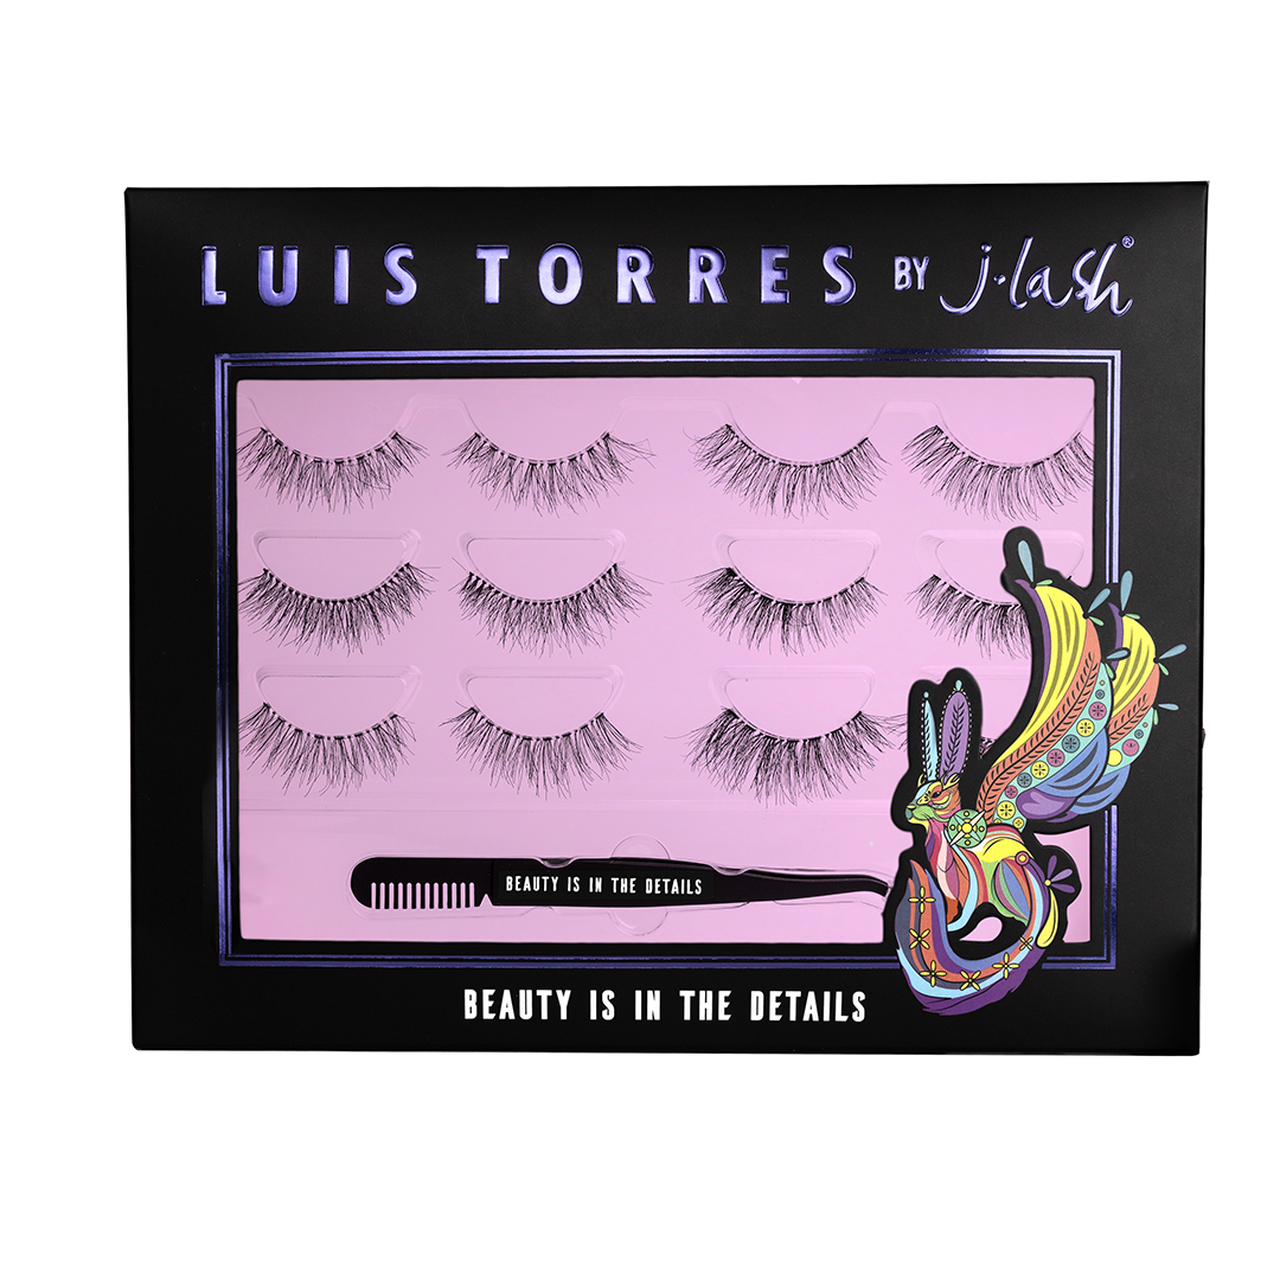 J.Lash - Luis Torres Beauty Is In the Details 6 pairs